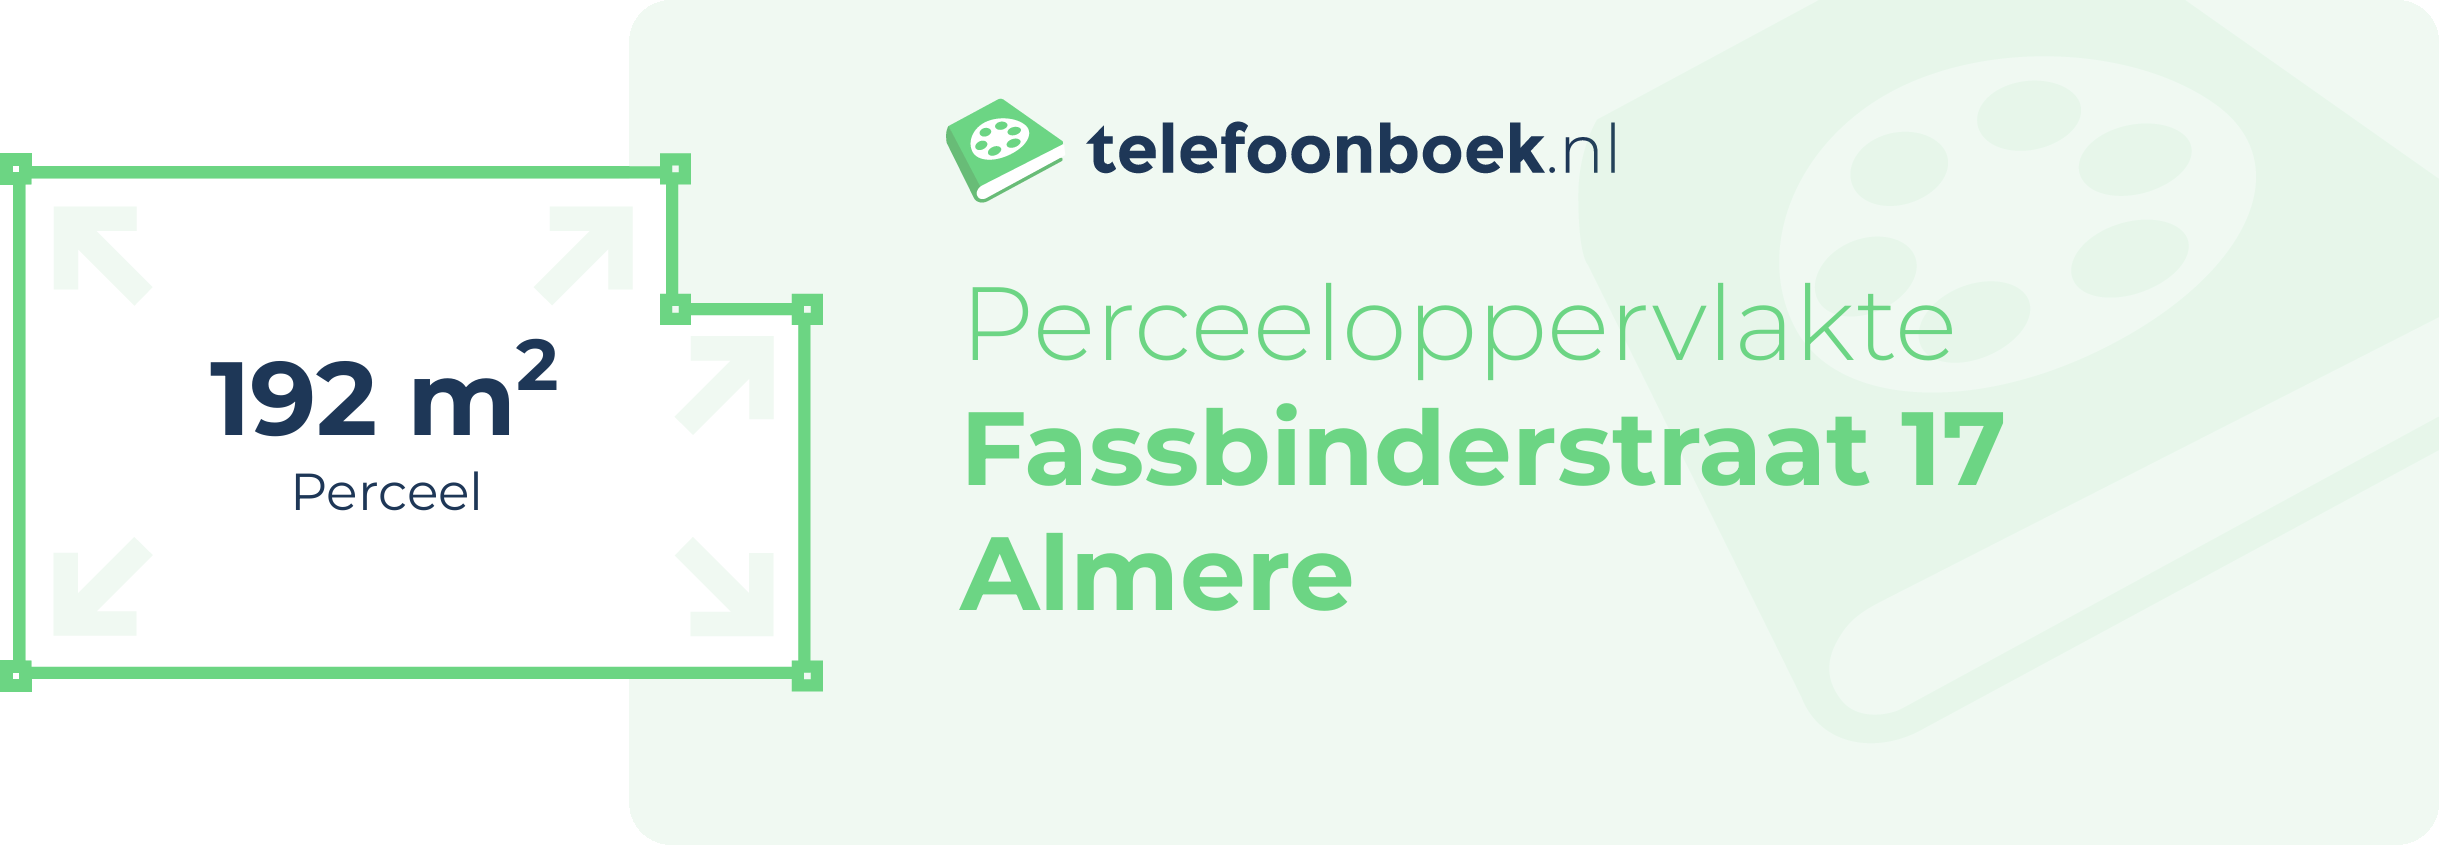 Perceeloppervlakte Fassbinderstraat 17 Almere